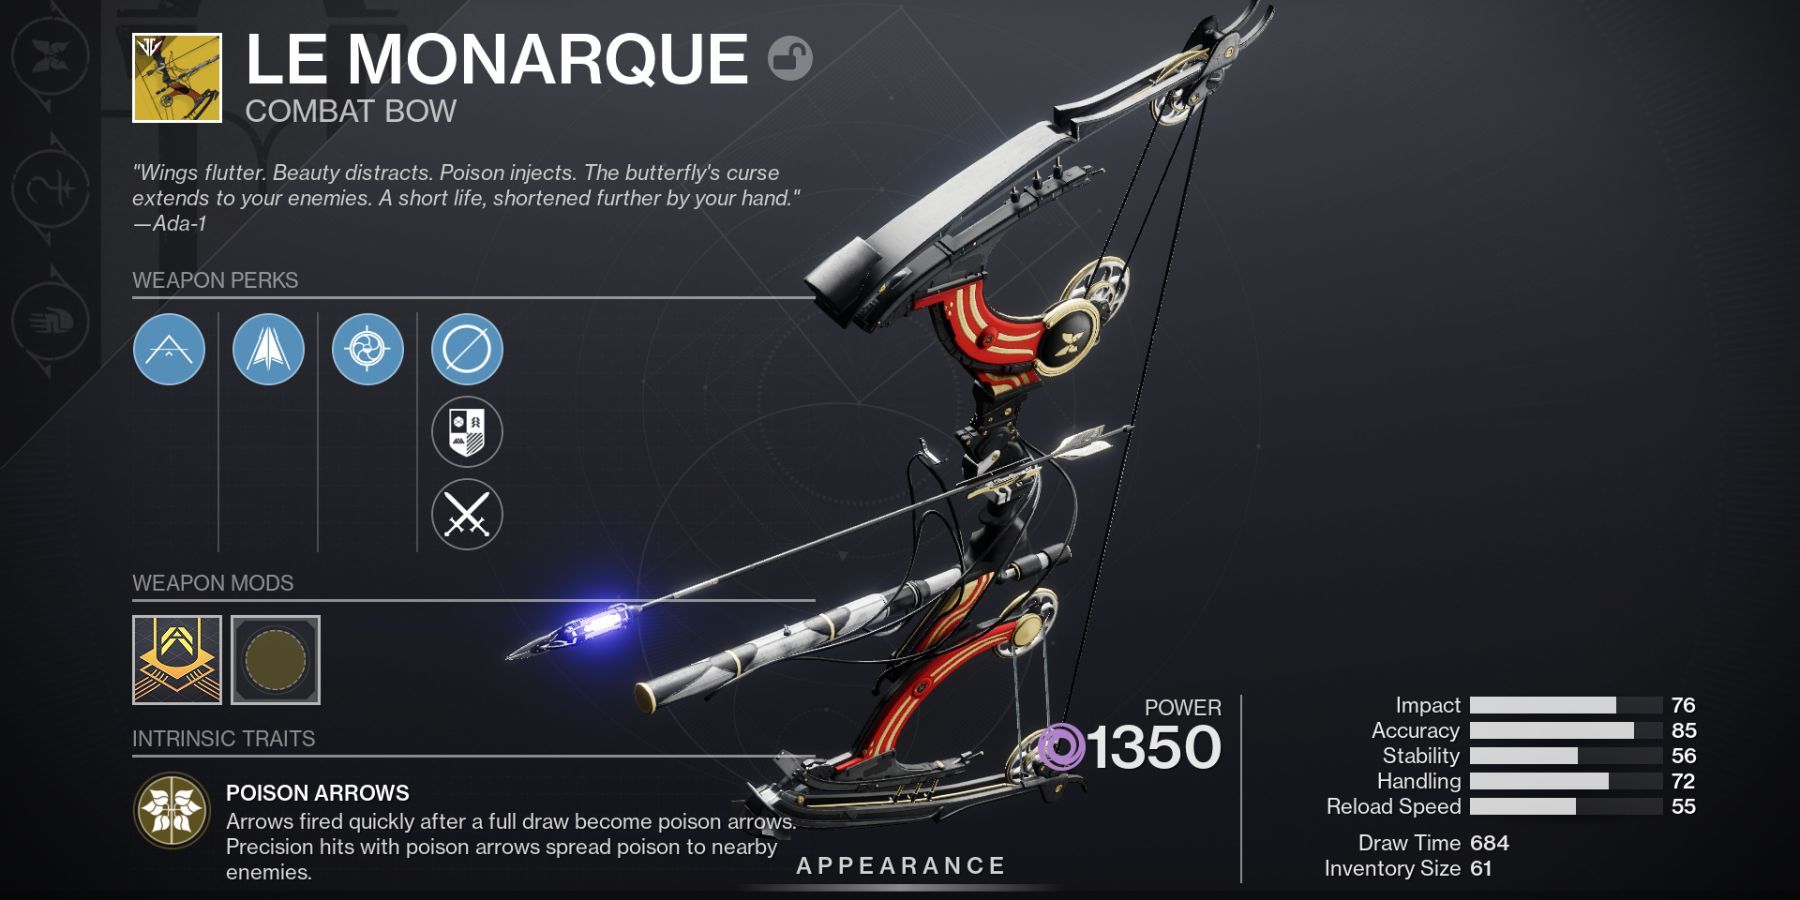 Destiny 2 Le Monarque Exotic Combat Bow